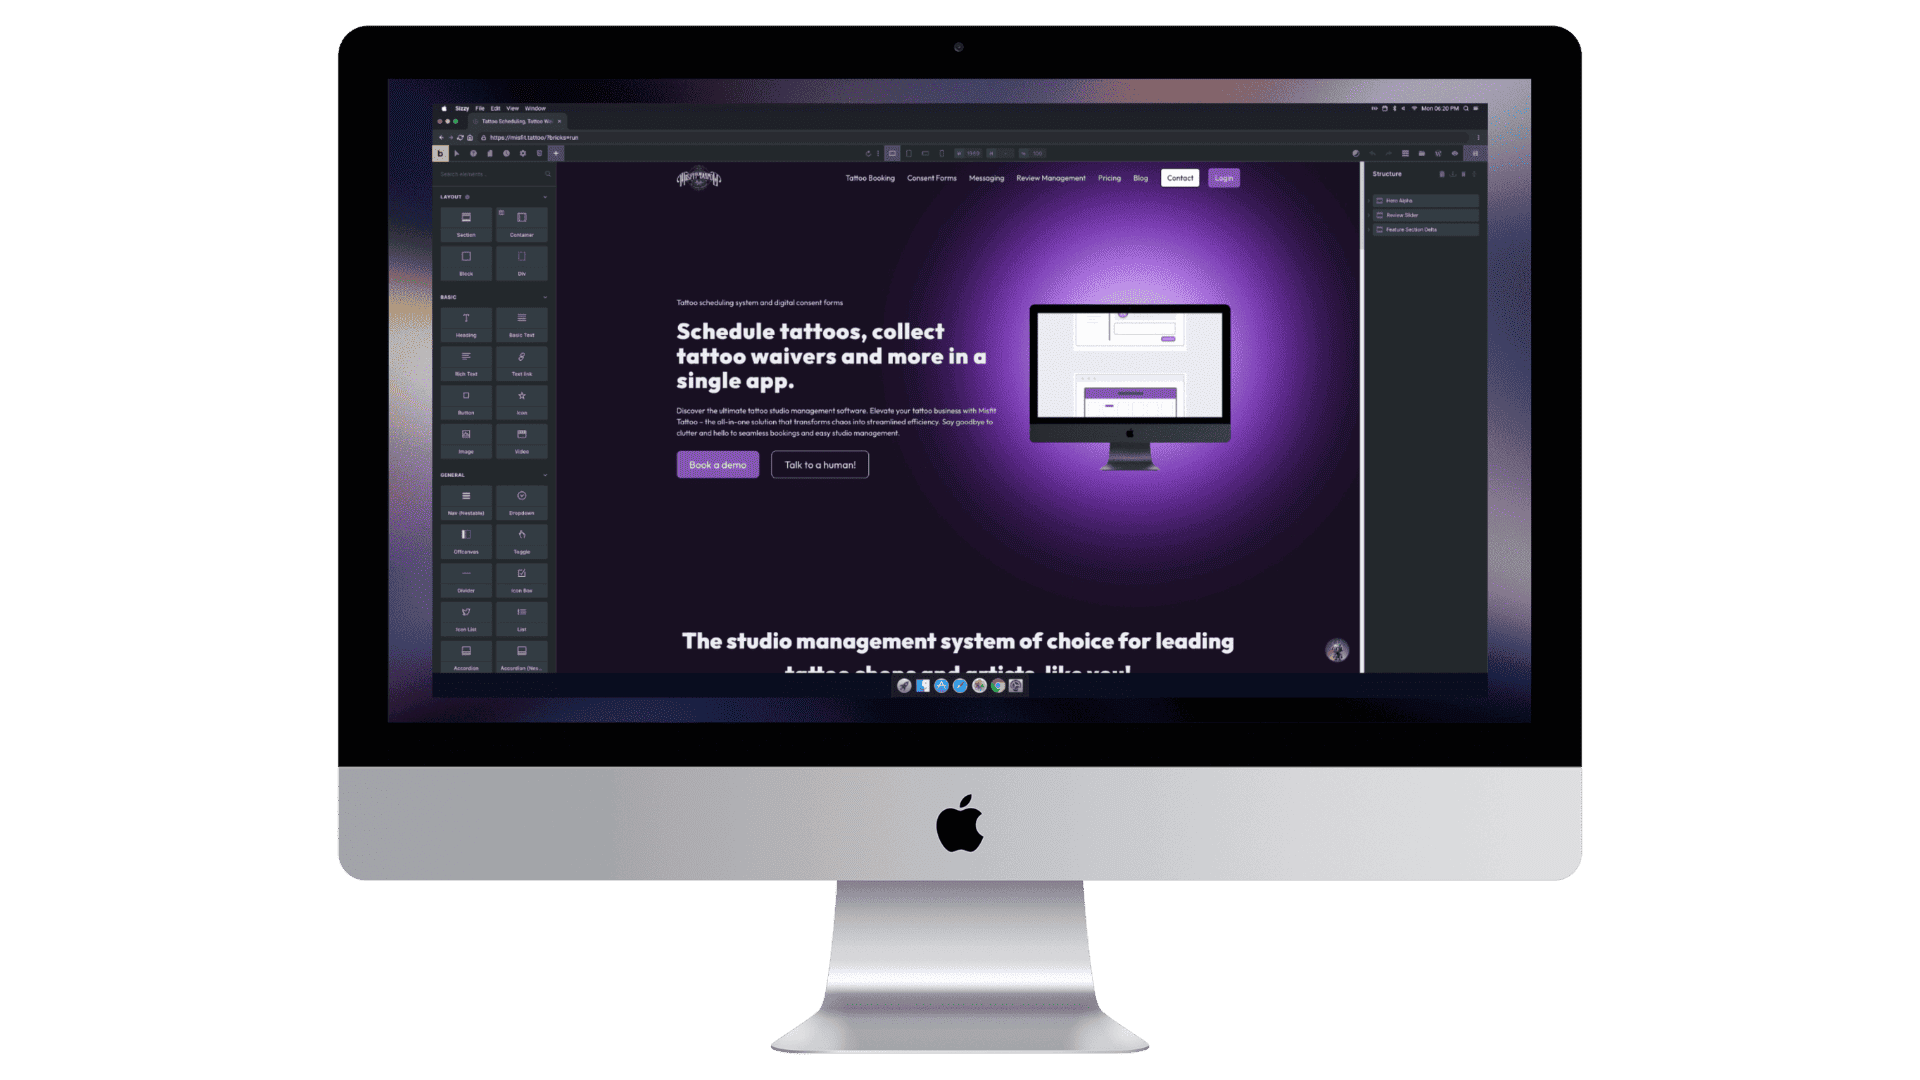 iMac displaying the Misfit Tattoo website designed by Kelowna website design company Misfit Media Web Design, showcasing a custom WordPress website design with a modern and user-friendly designed website interface.